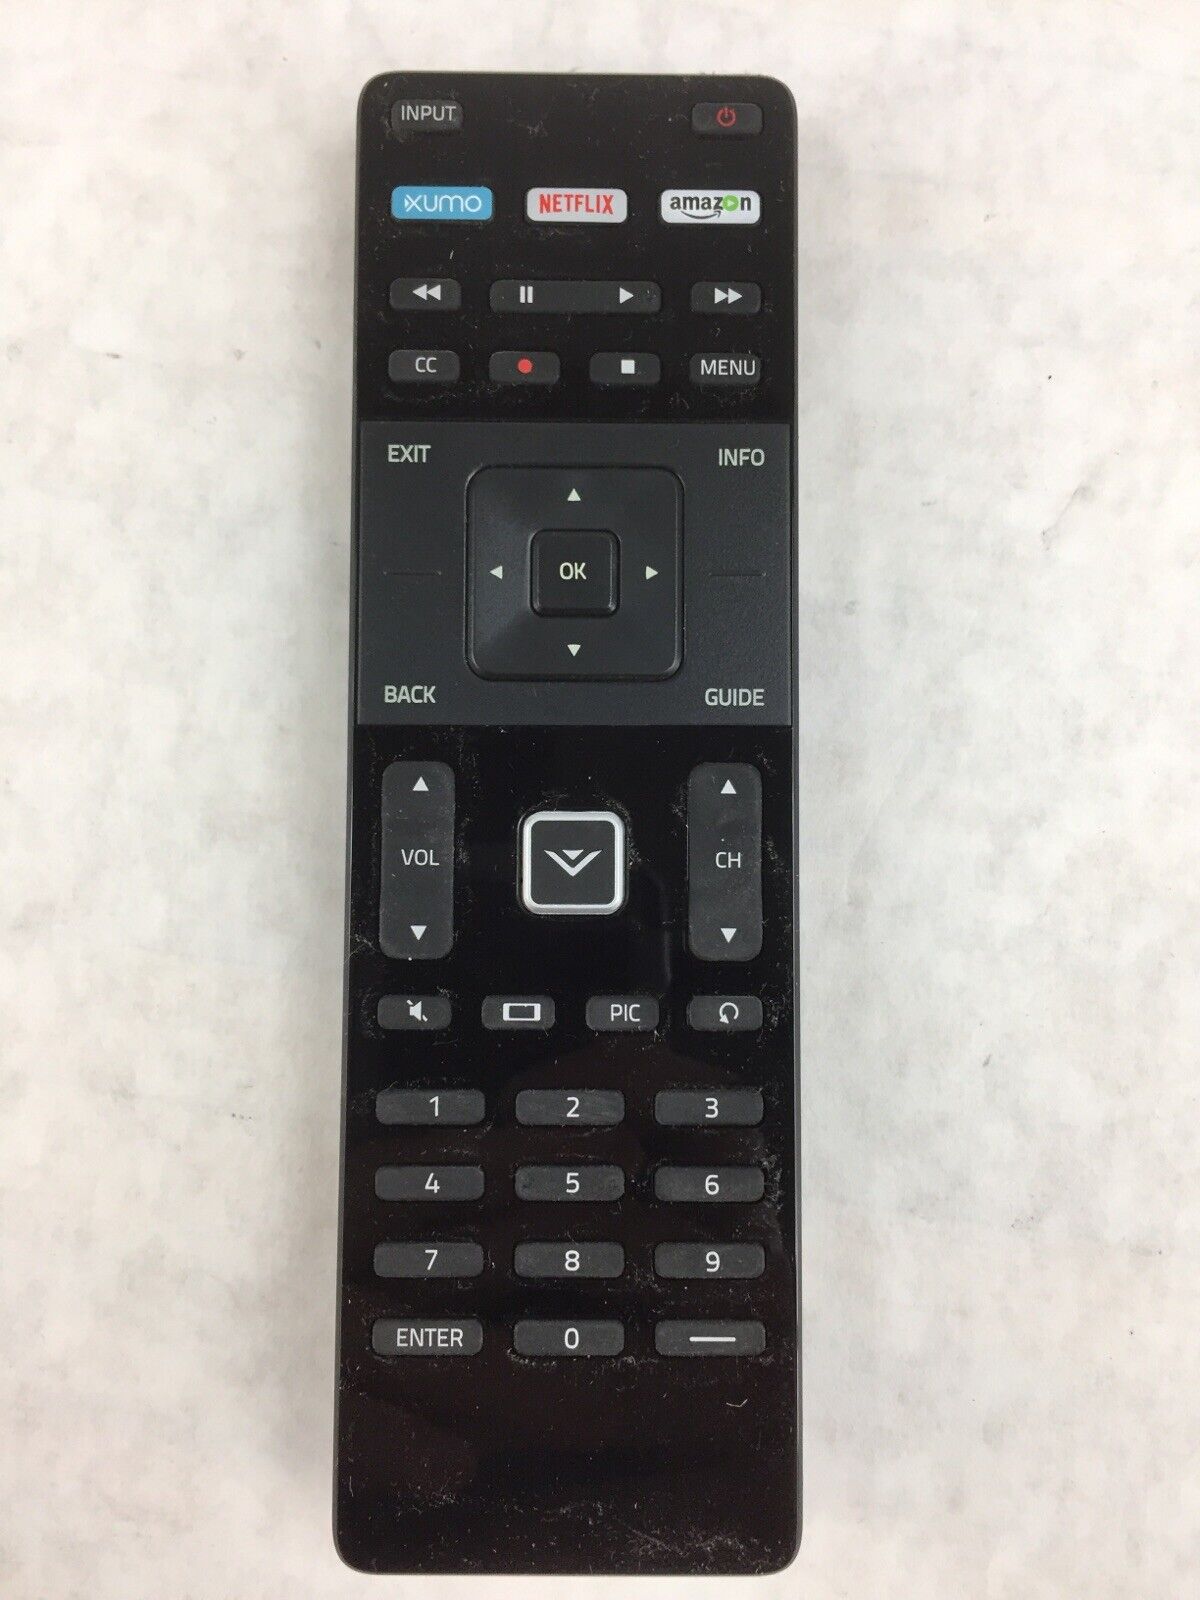 VIZIO XRT122 TV Remote Control with Xumo Netflix IHeartRadio Shortcut Key